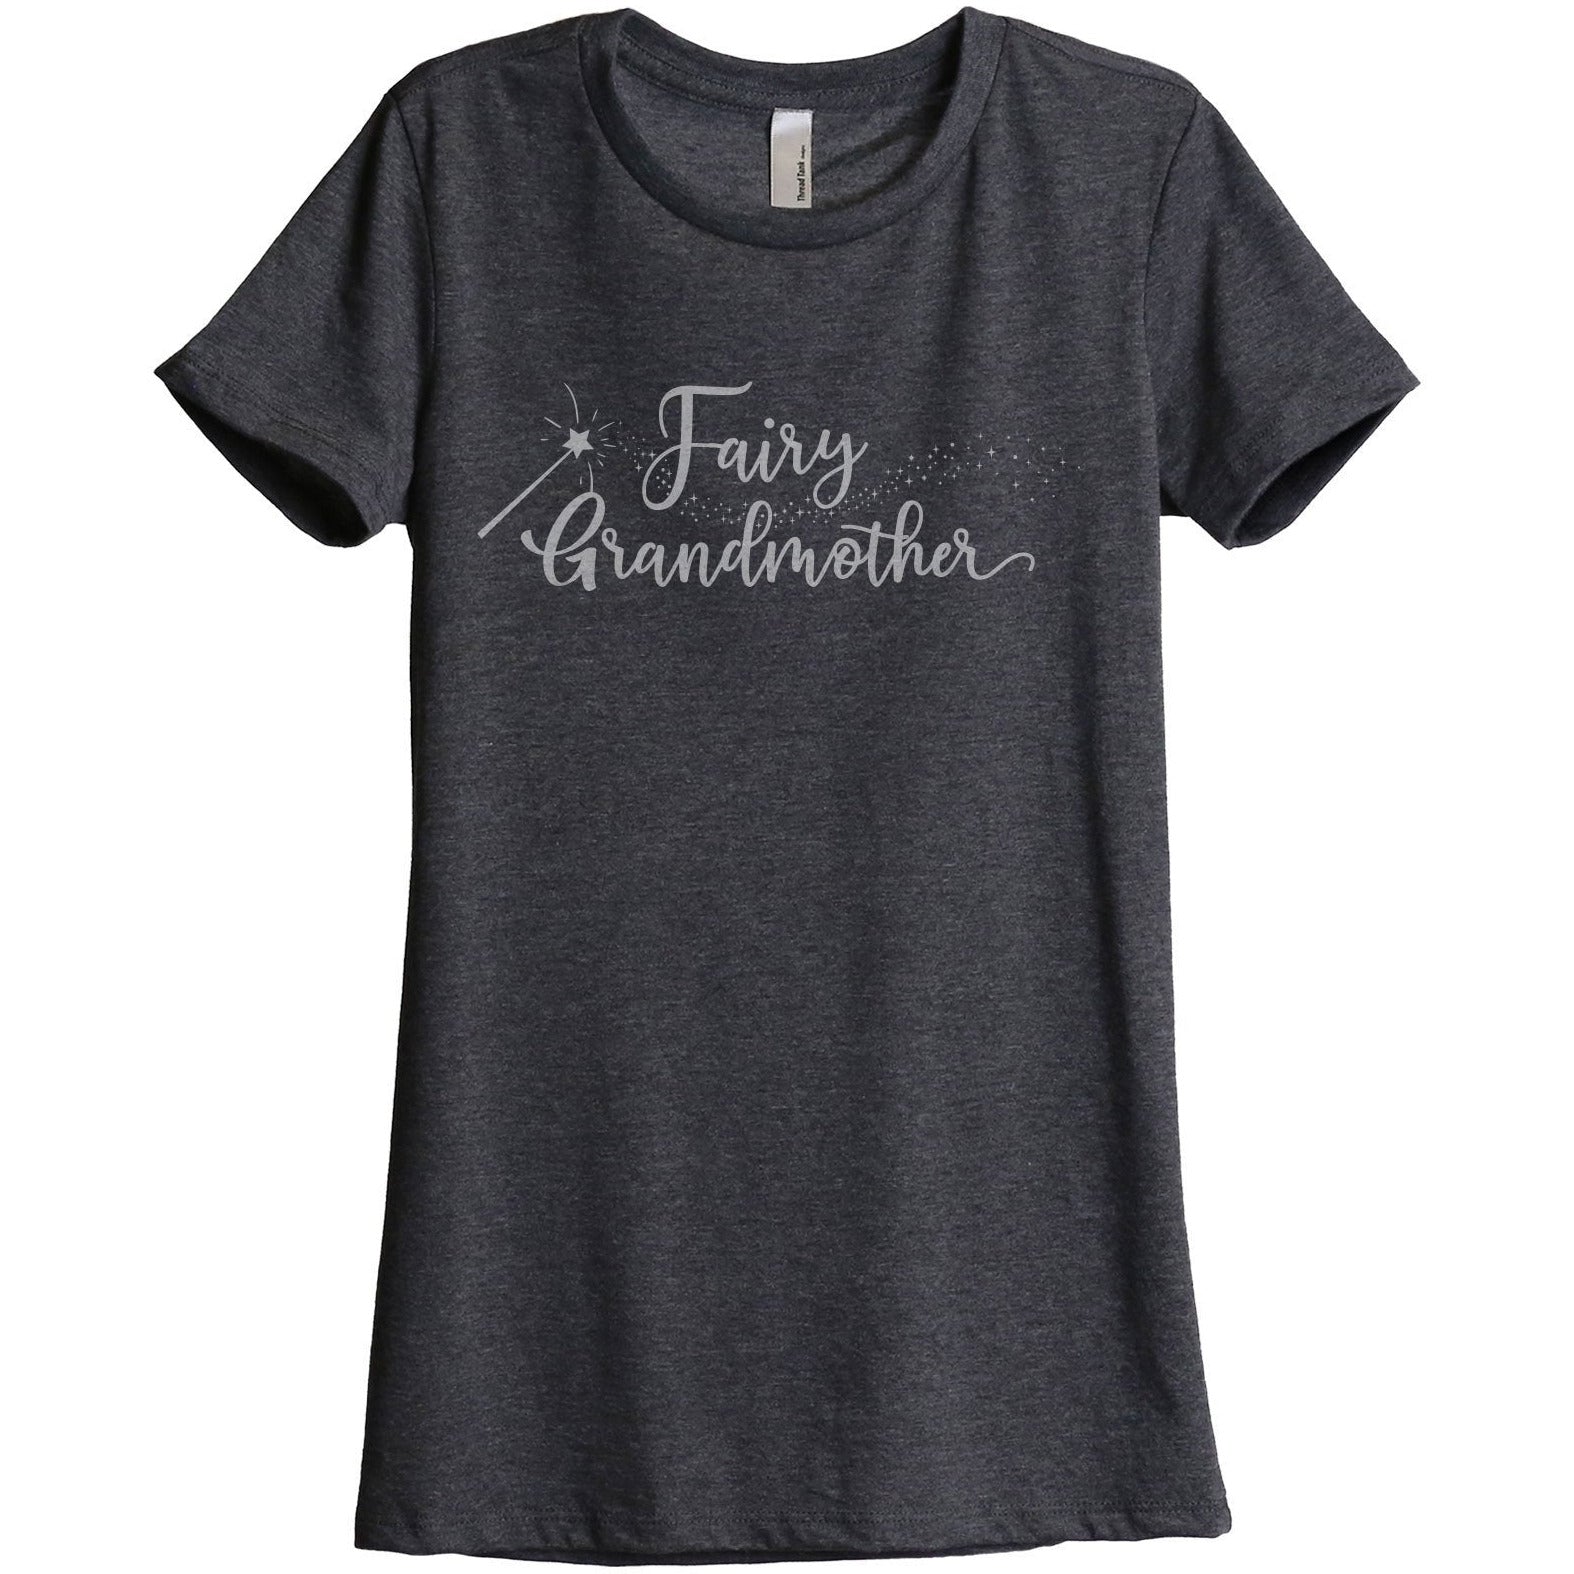 Fairy Grandmother Women's Relaxed Crewneck T-Shirt Top Tee Charcoal Grey
